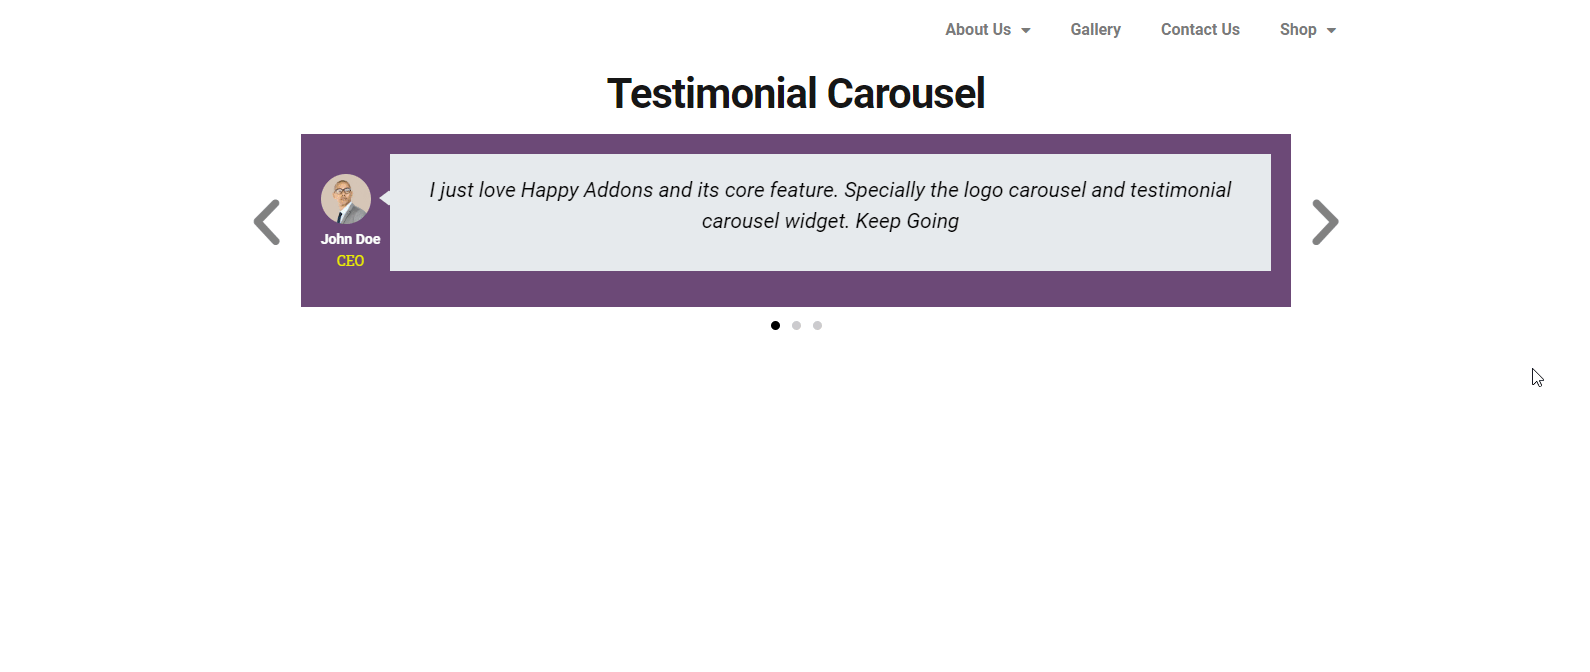 Testimonial Carousel